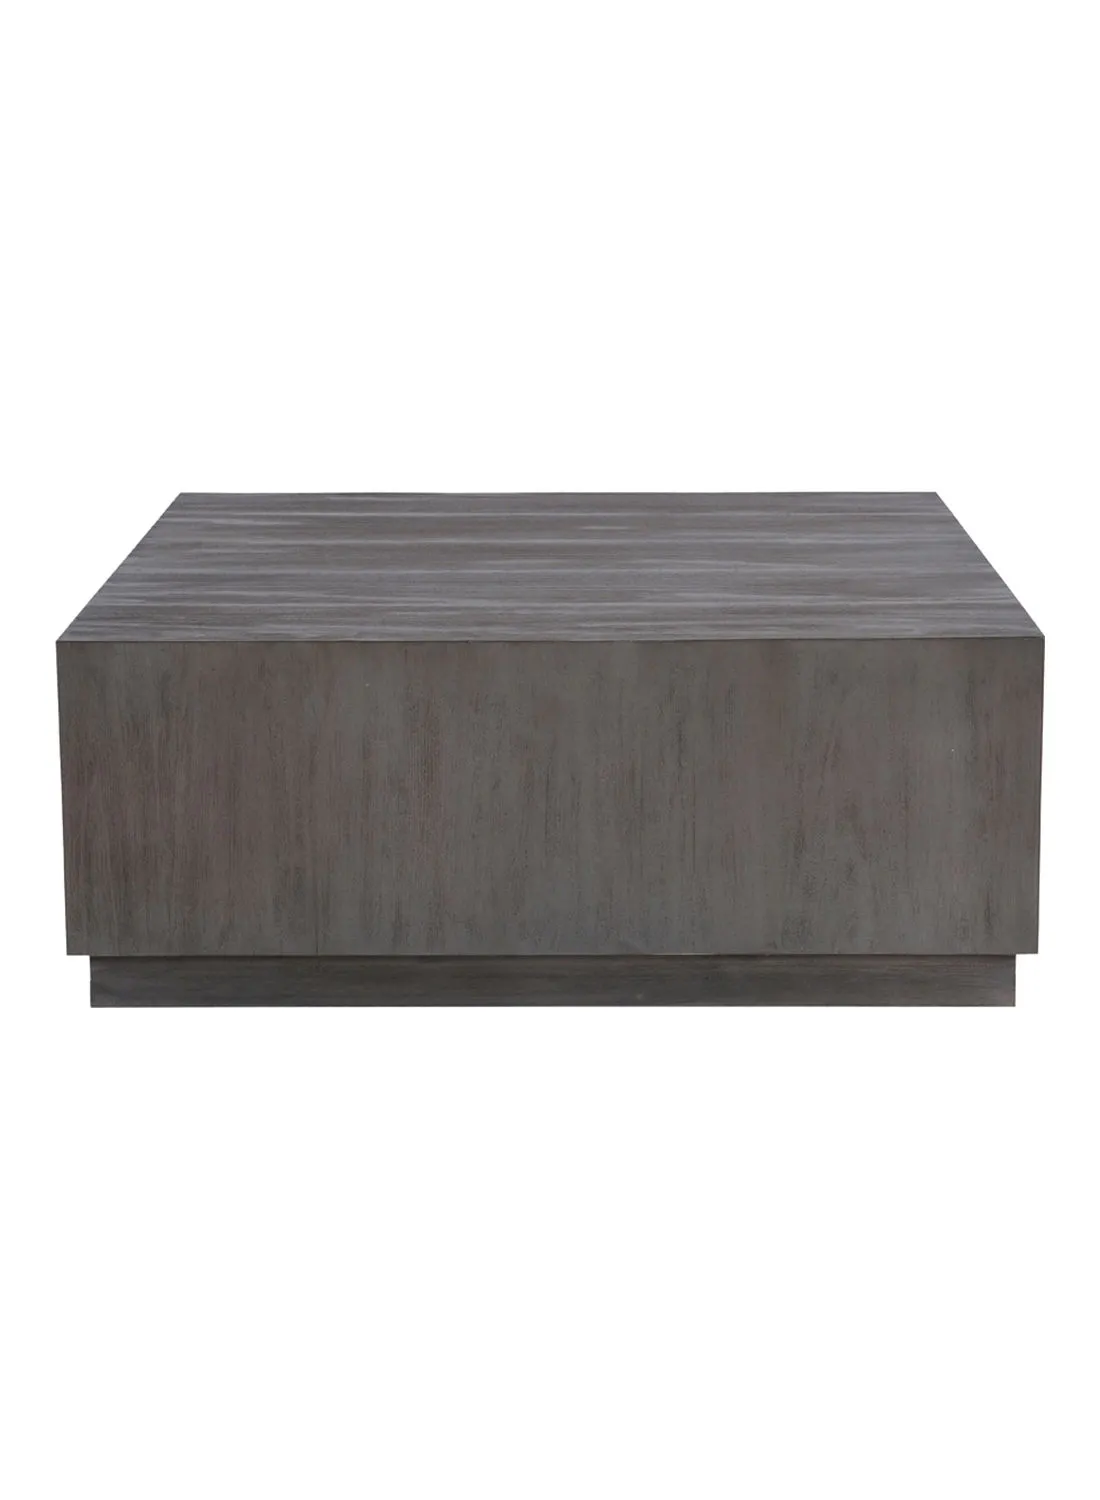 ebb & flow Side Table Luxurious - In Burnt Oak Wood - Used Next To Sofa As Coffee Corner